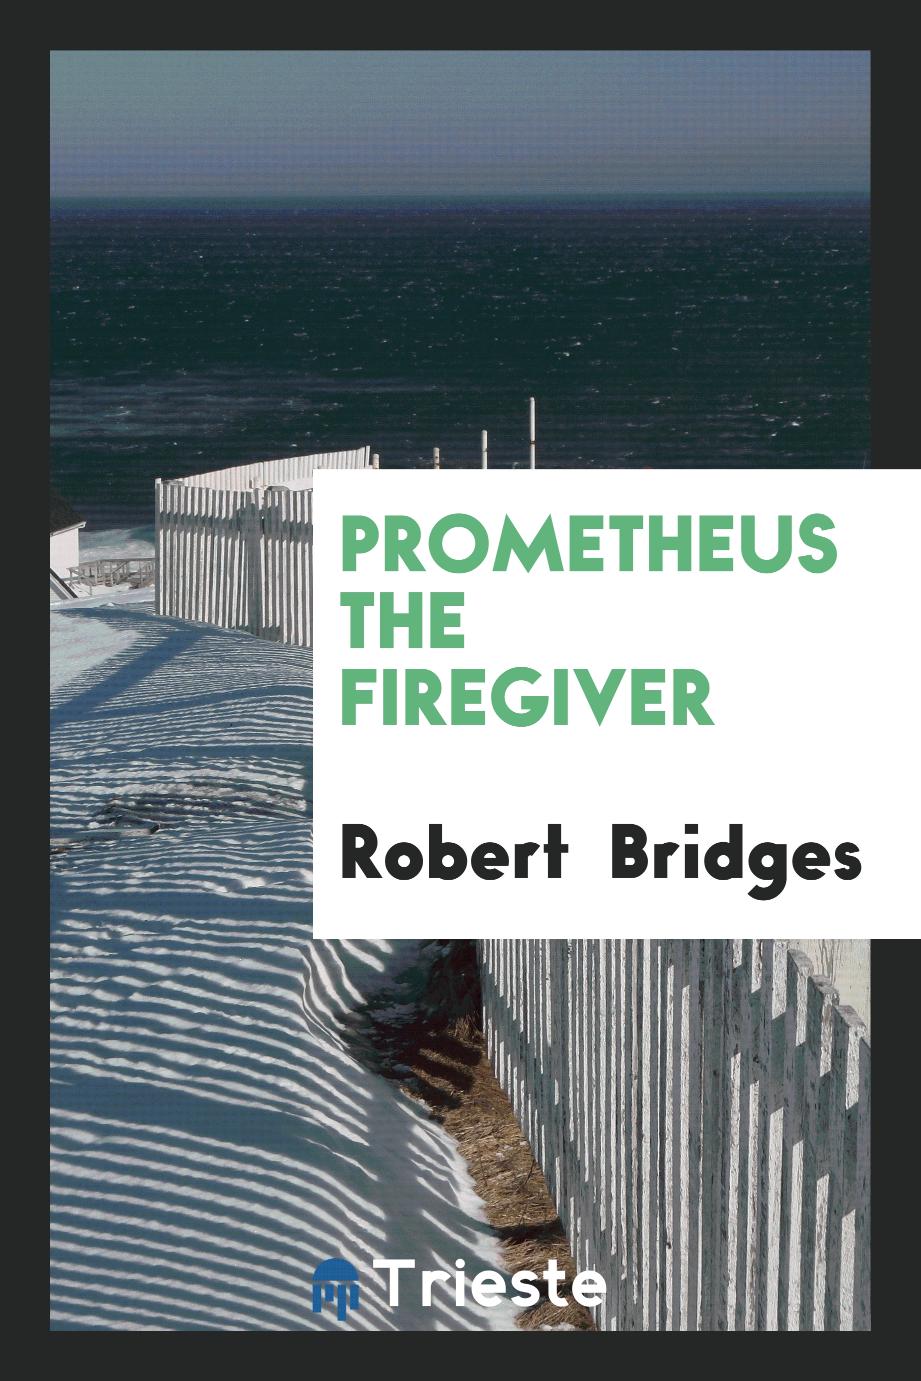 Prometheus the firegiver